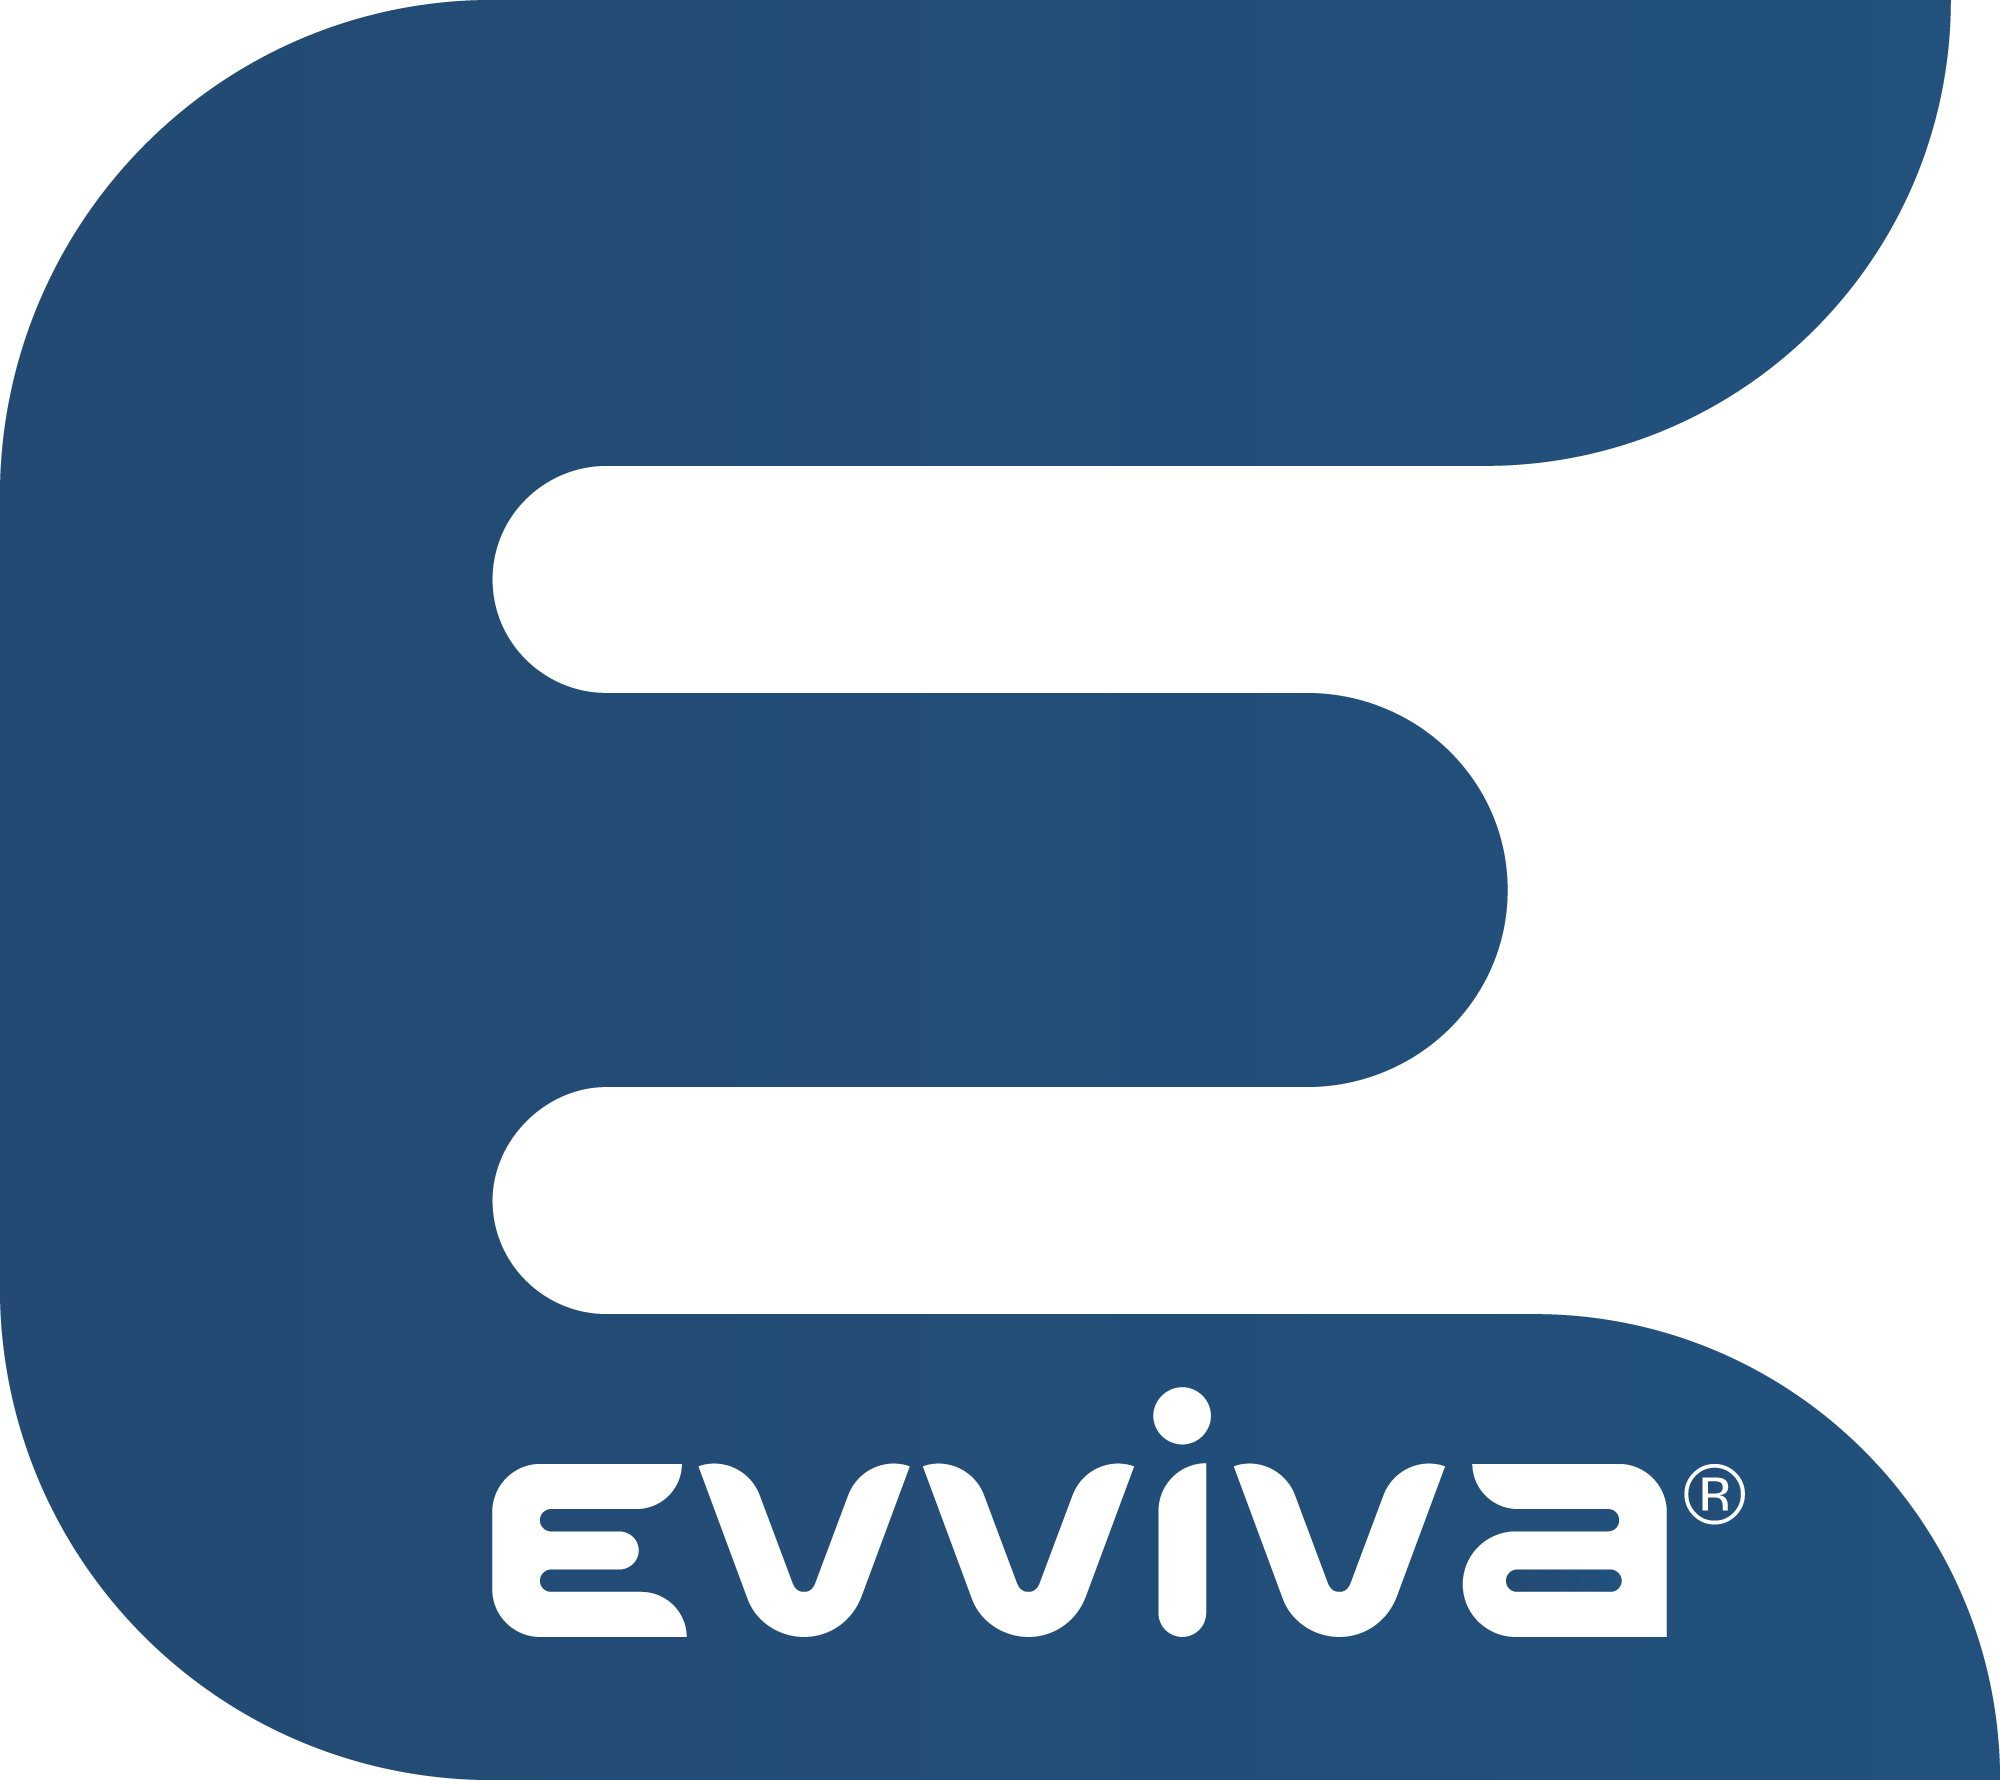 Evviva Brands profile on Qualified.One